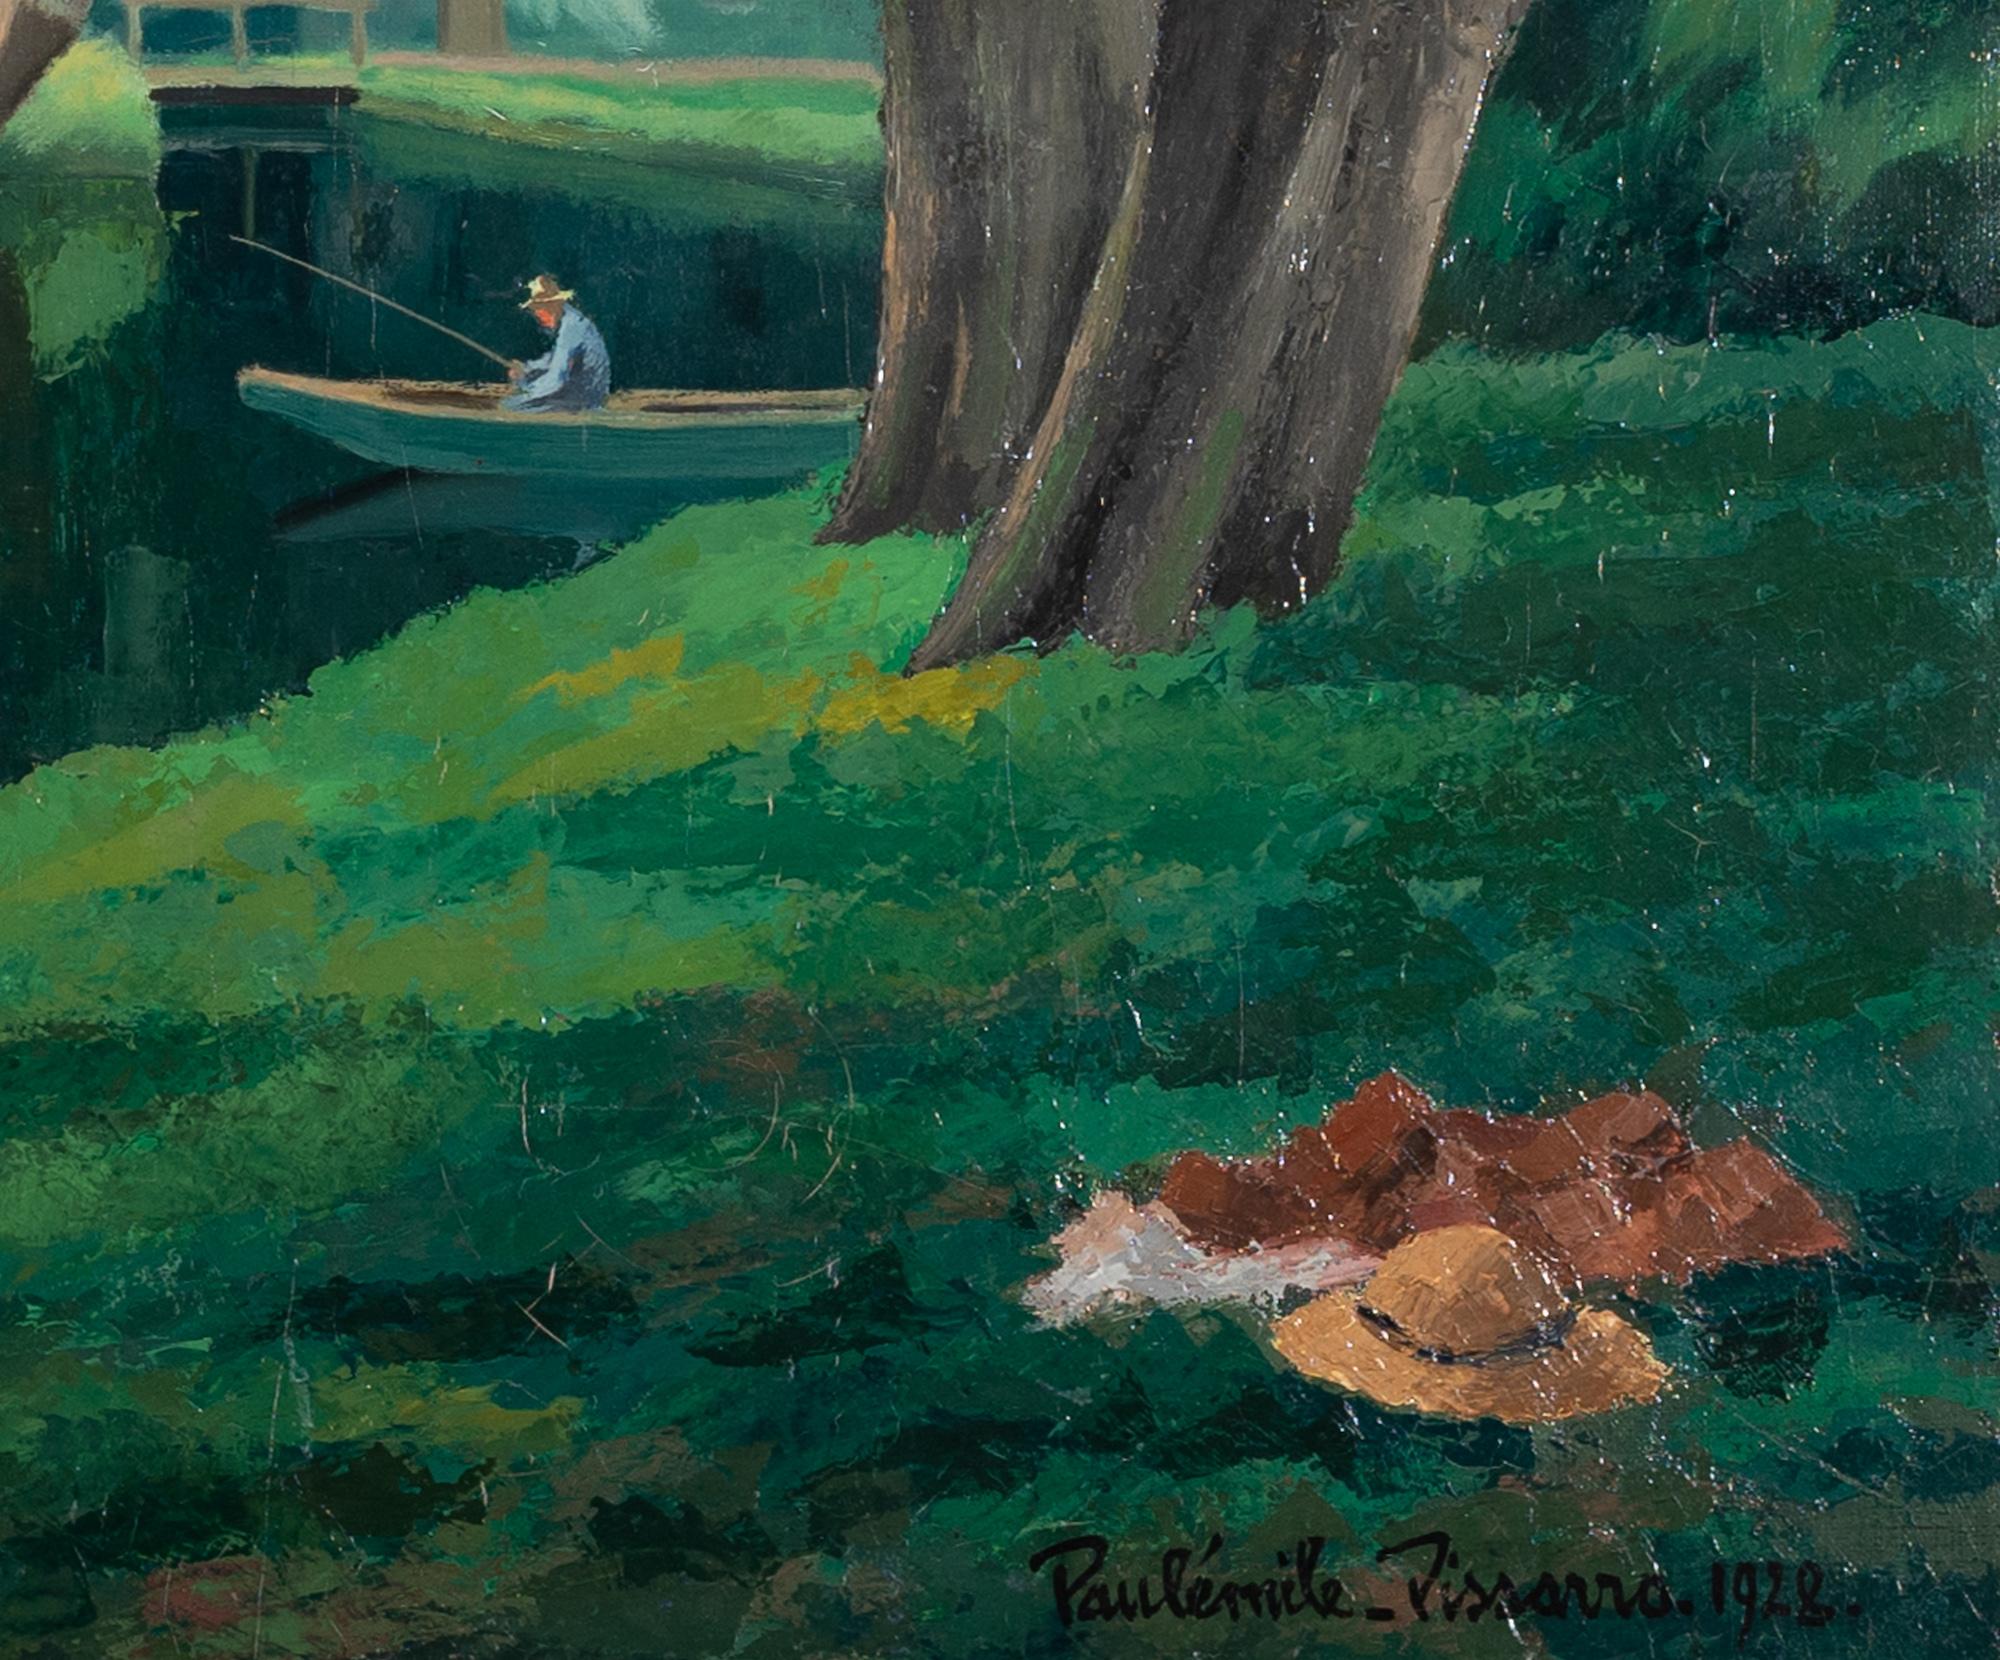 Les Baigneuses by Paulémile Pissarro - Nude scene, riverscene painting For Sale 1